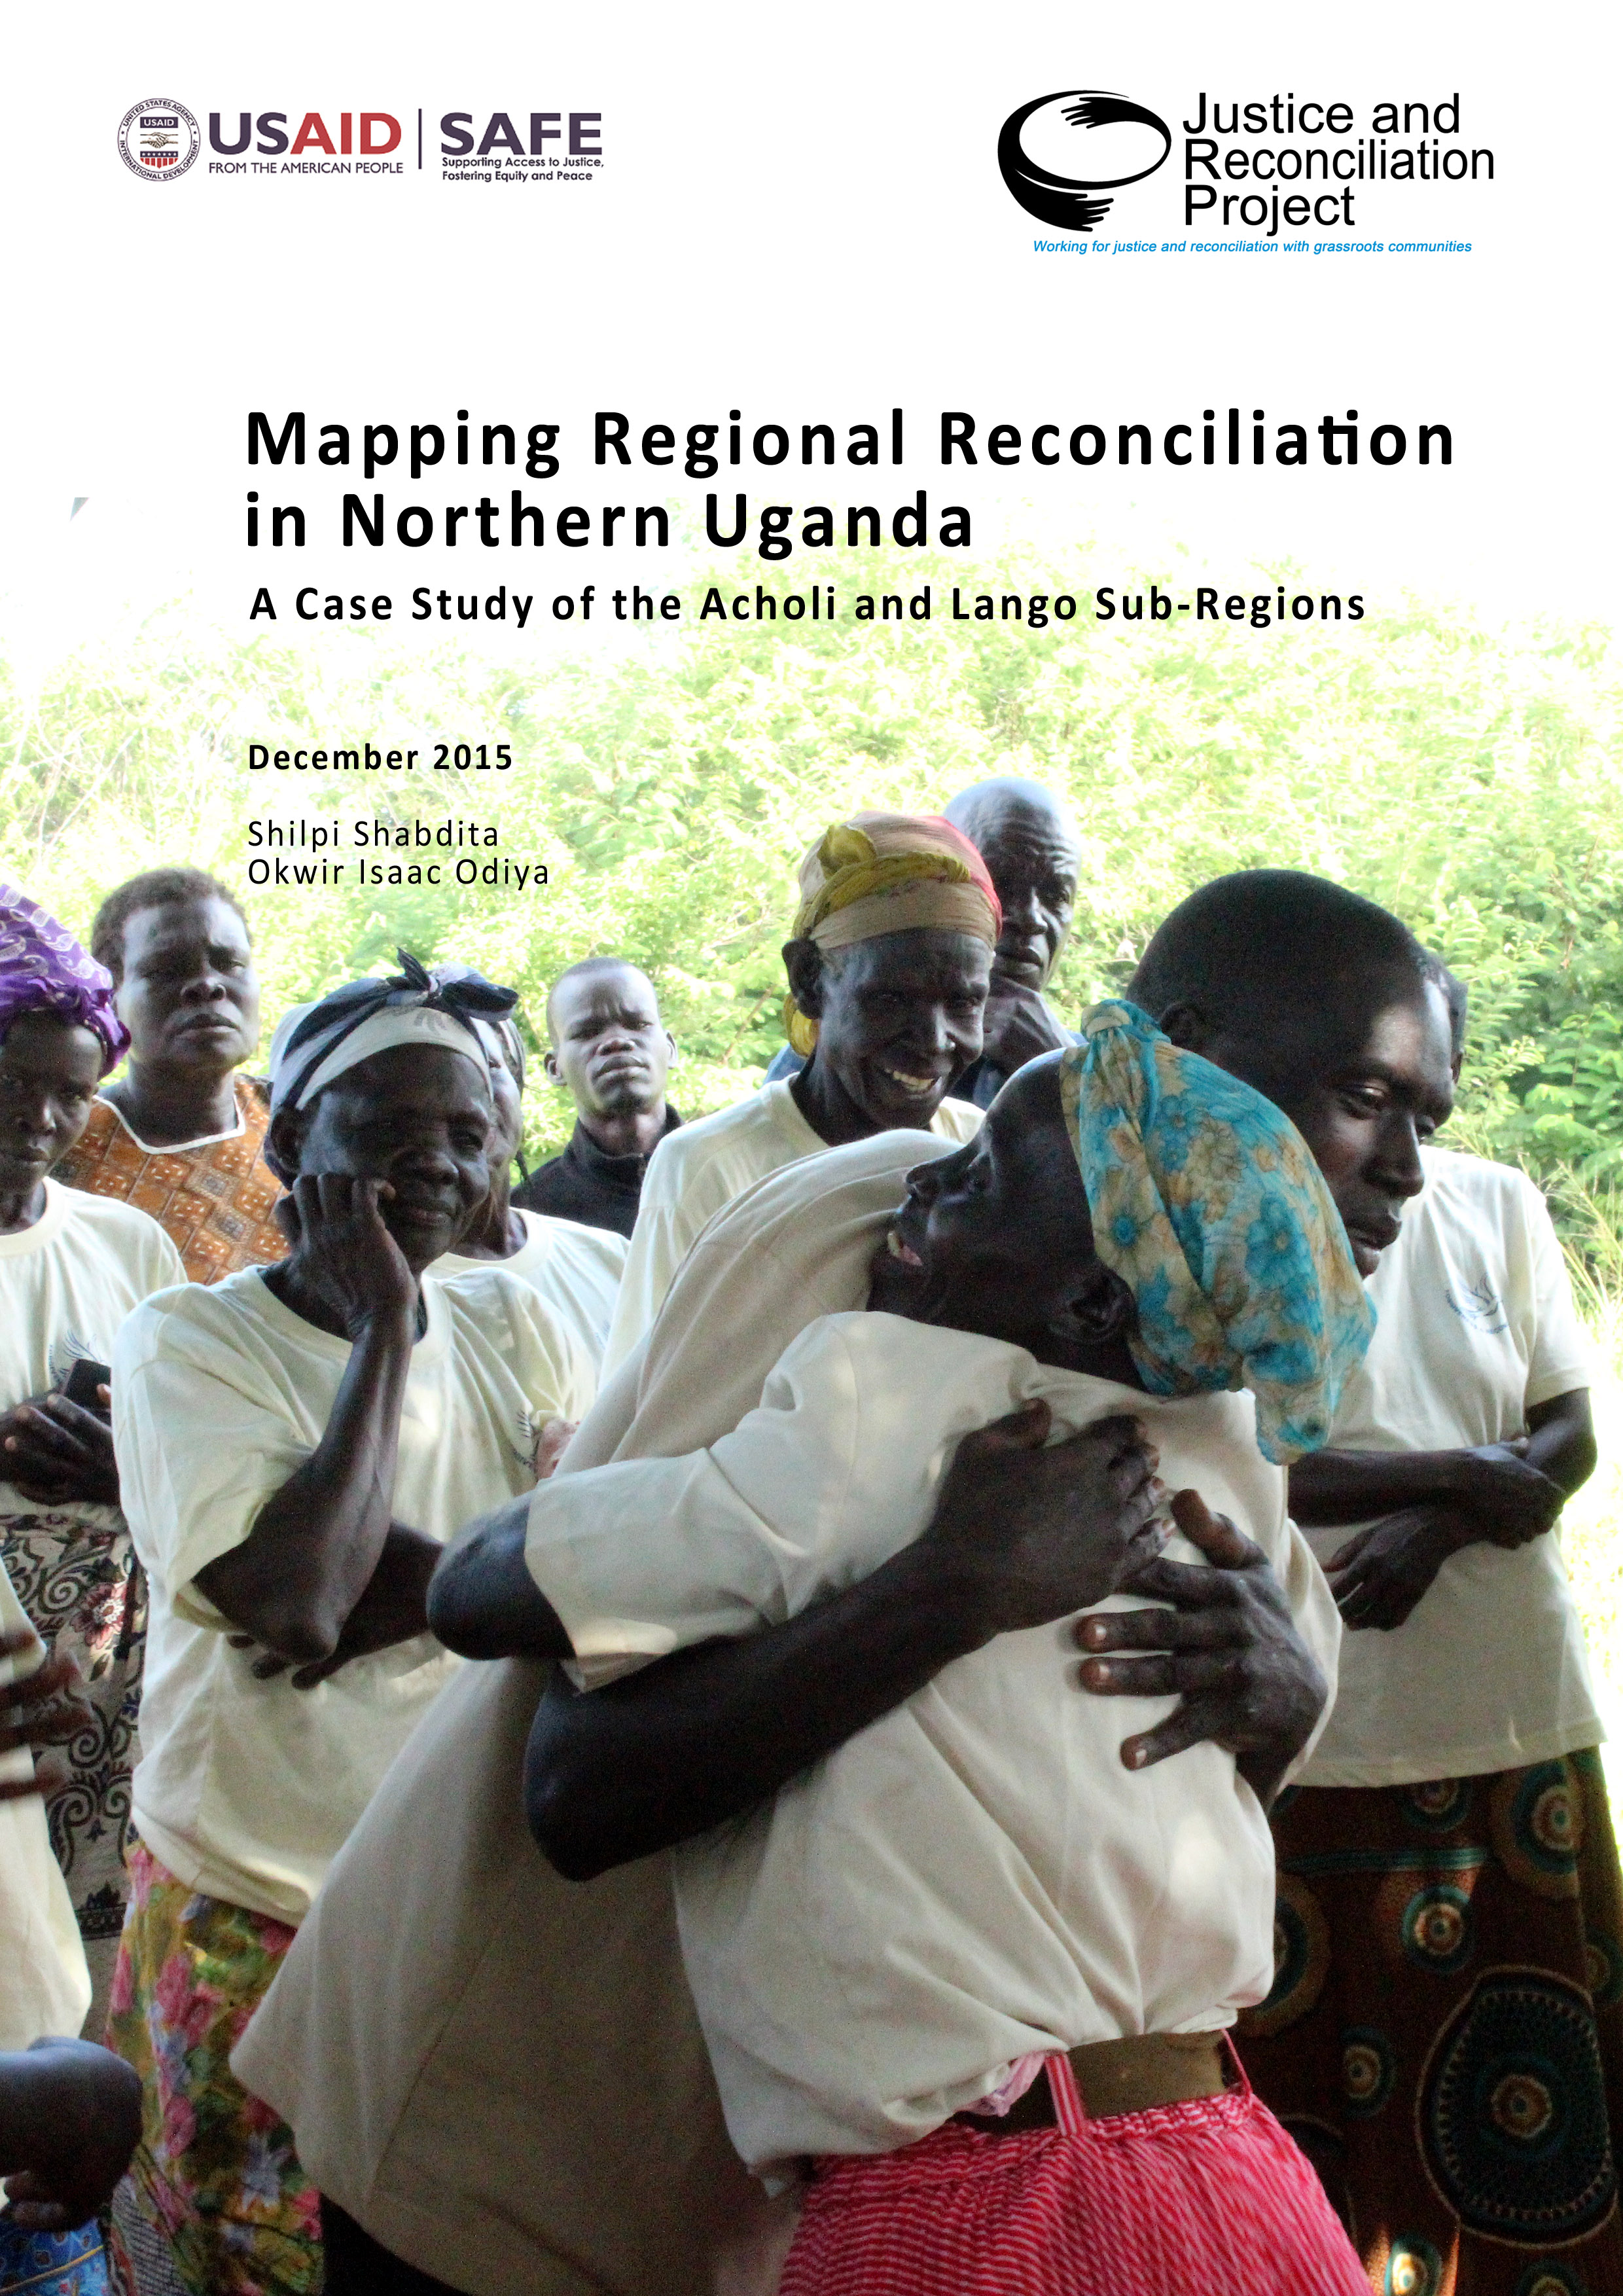 Mapping Regional Reconciliation in Northern Uganda: A Case Study of the Acholi and Lango Sub-Regions